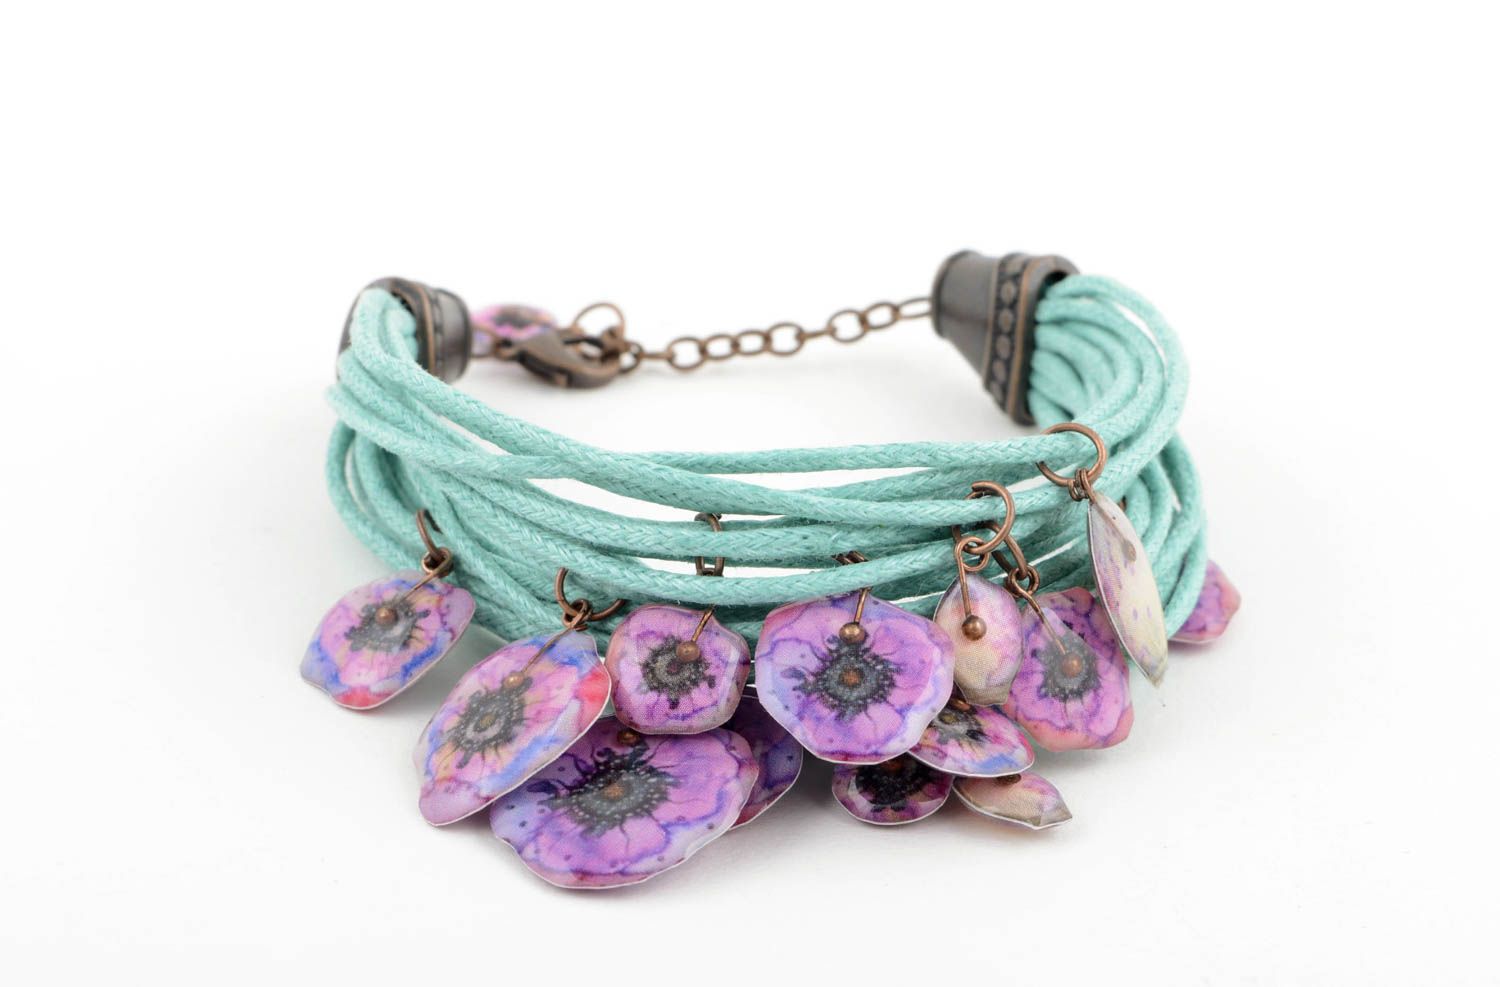 Unusual handmade woven cord bracelet wrist bracelet designs accessories for girl photo 3